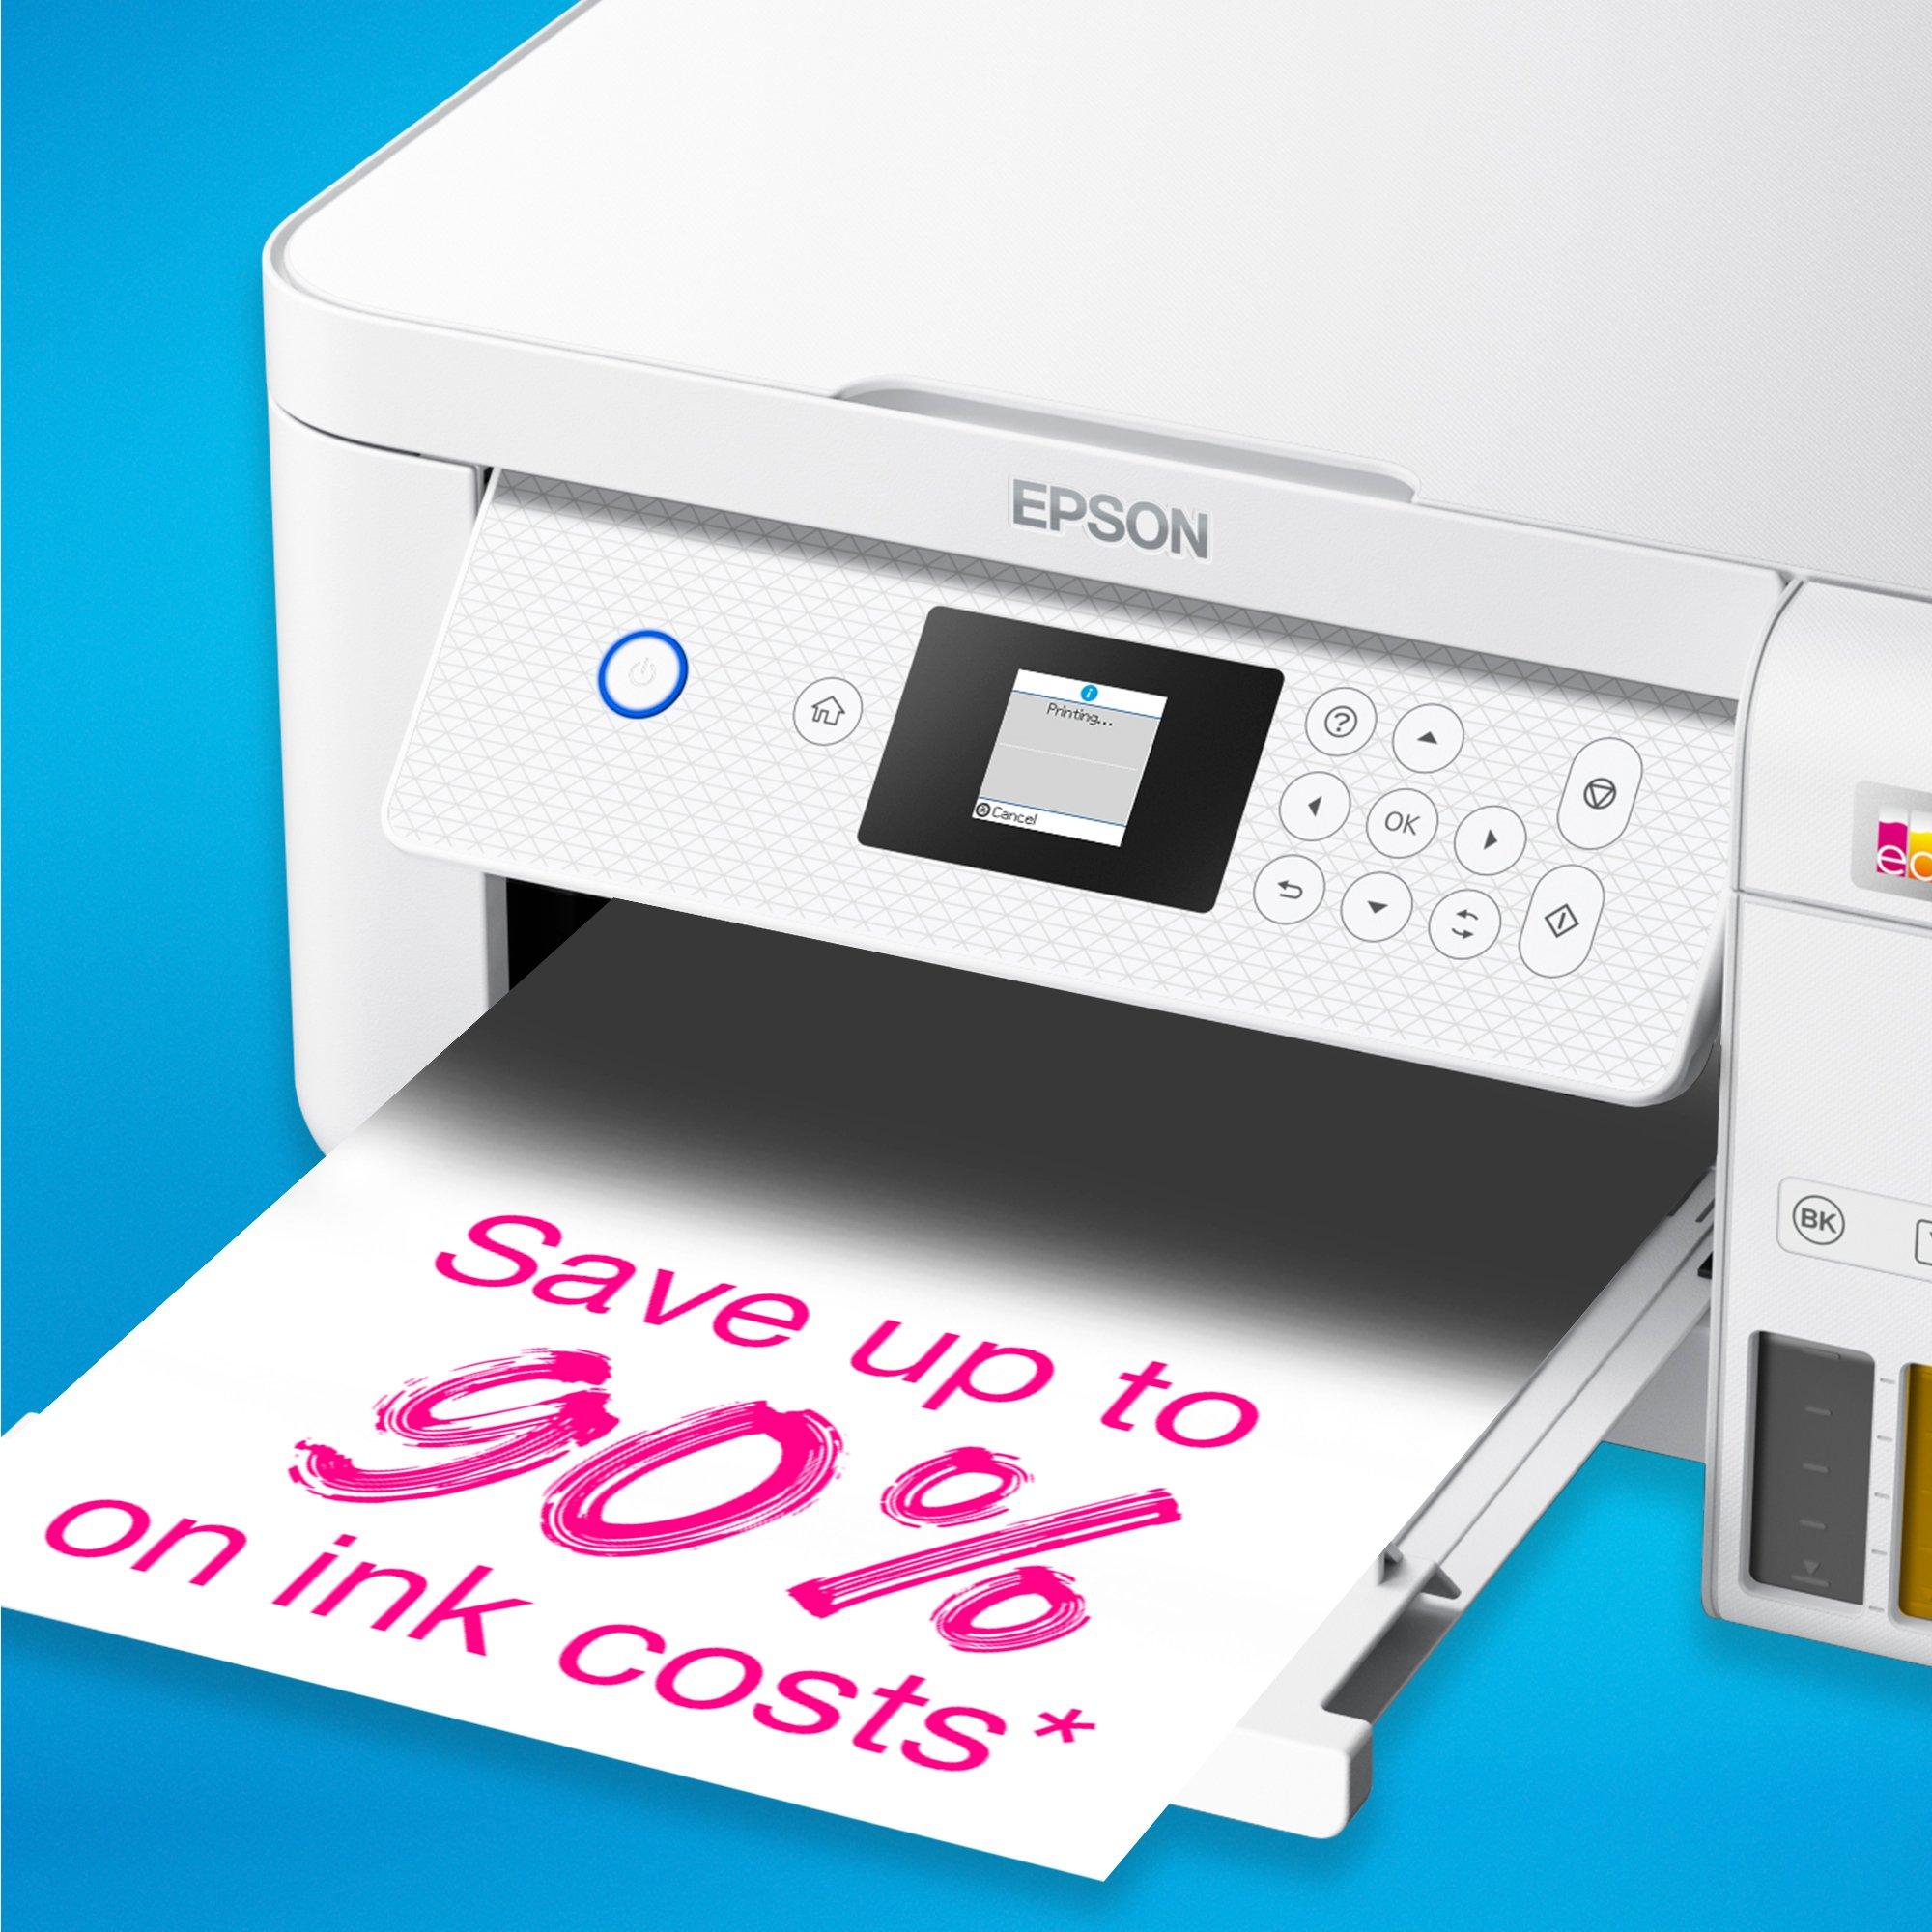 Epson Released New EcoTank Printers - RTM World